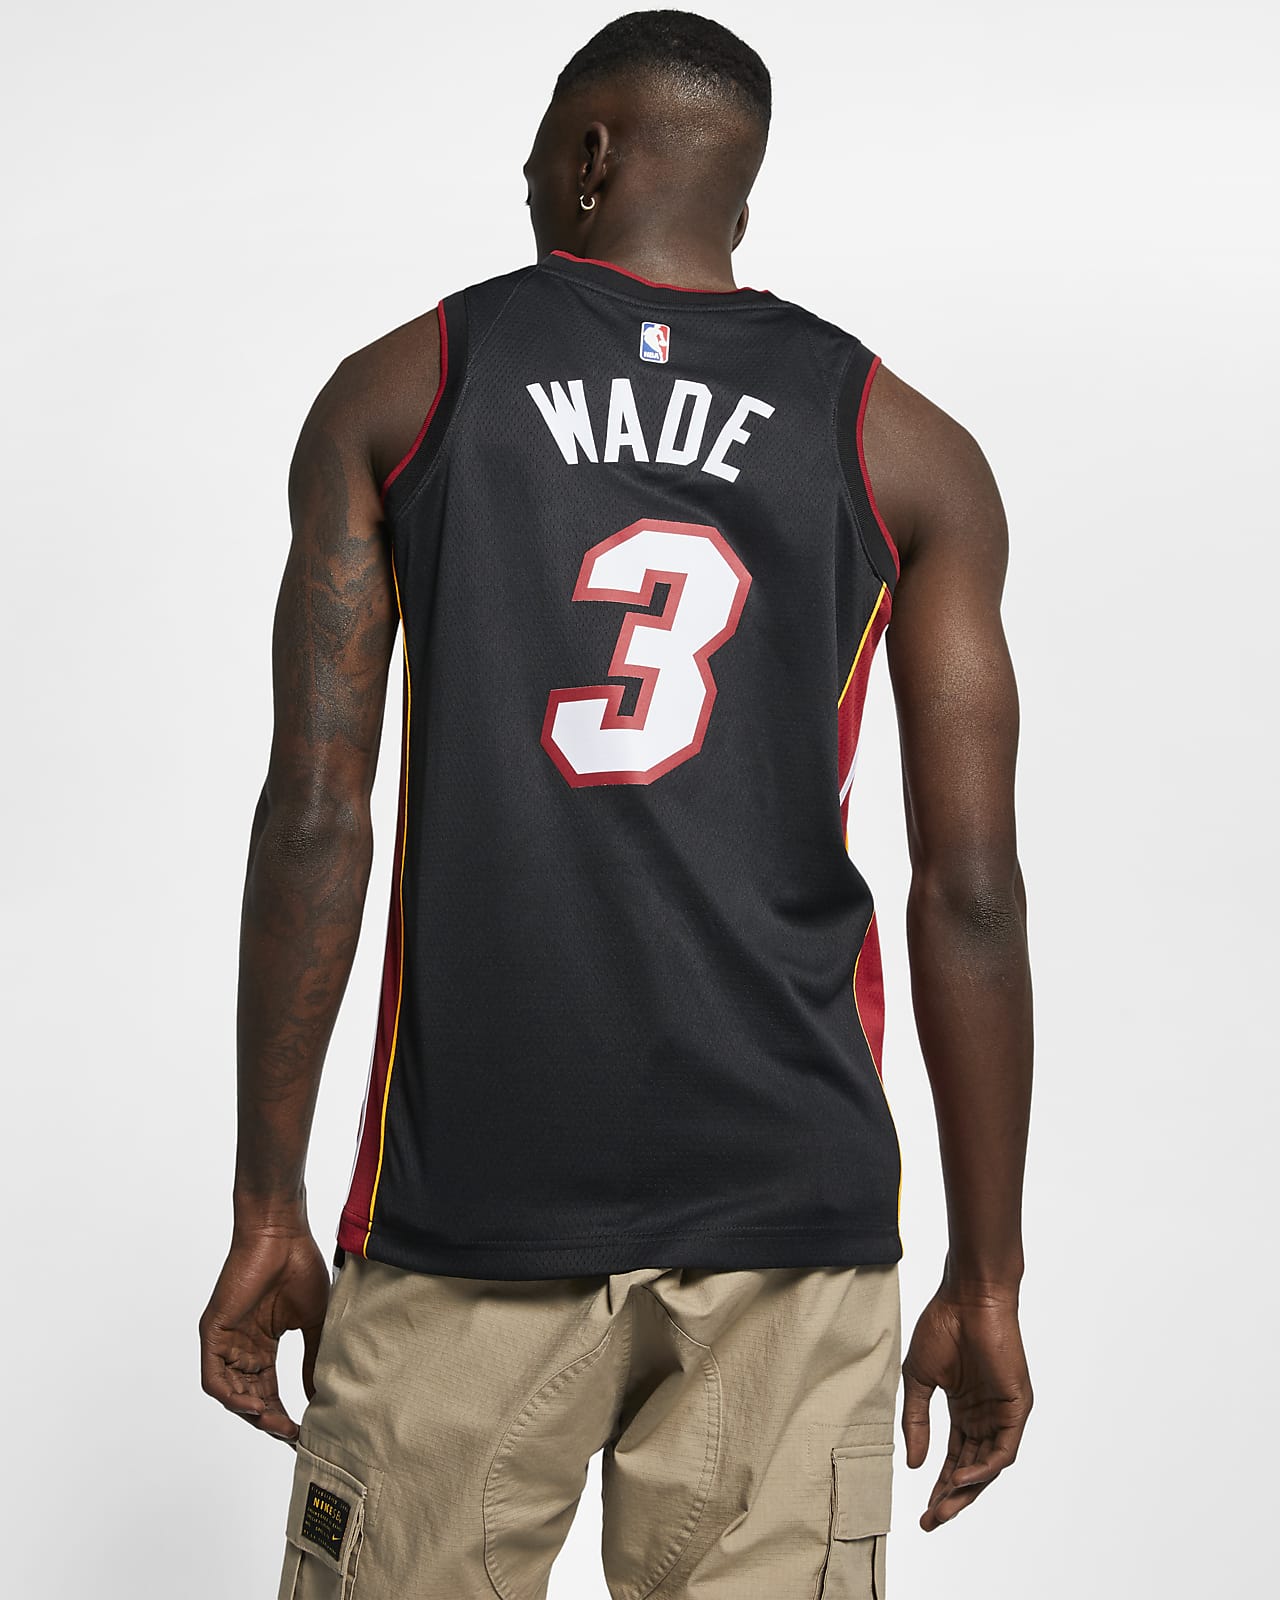 Camiseta Nike NBA para hombre Dwyane Wade Edition. Nike .com